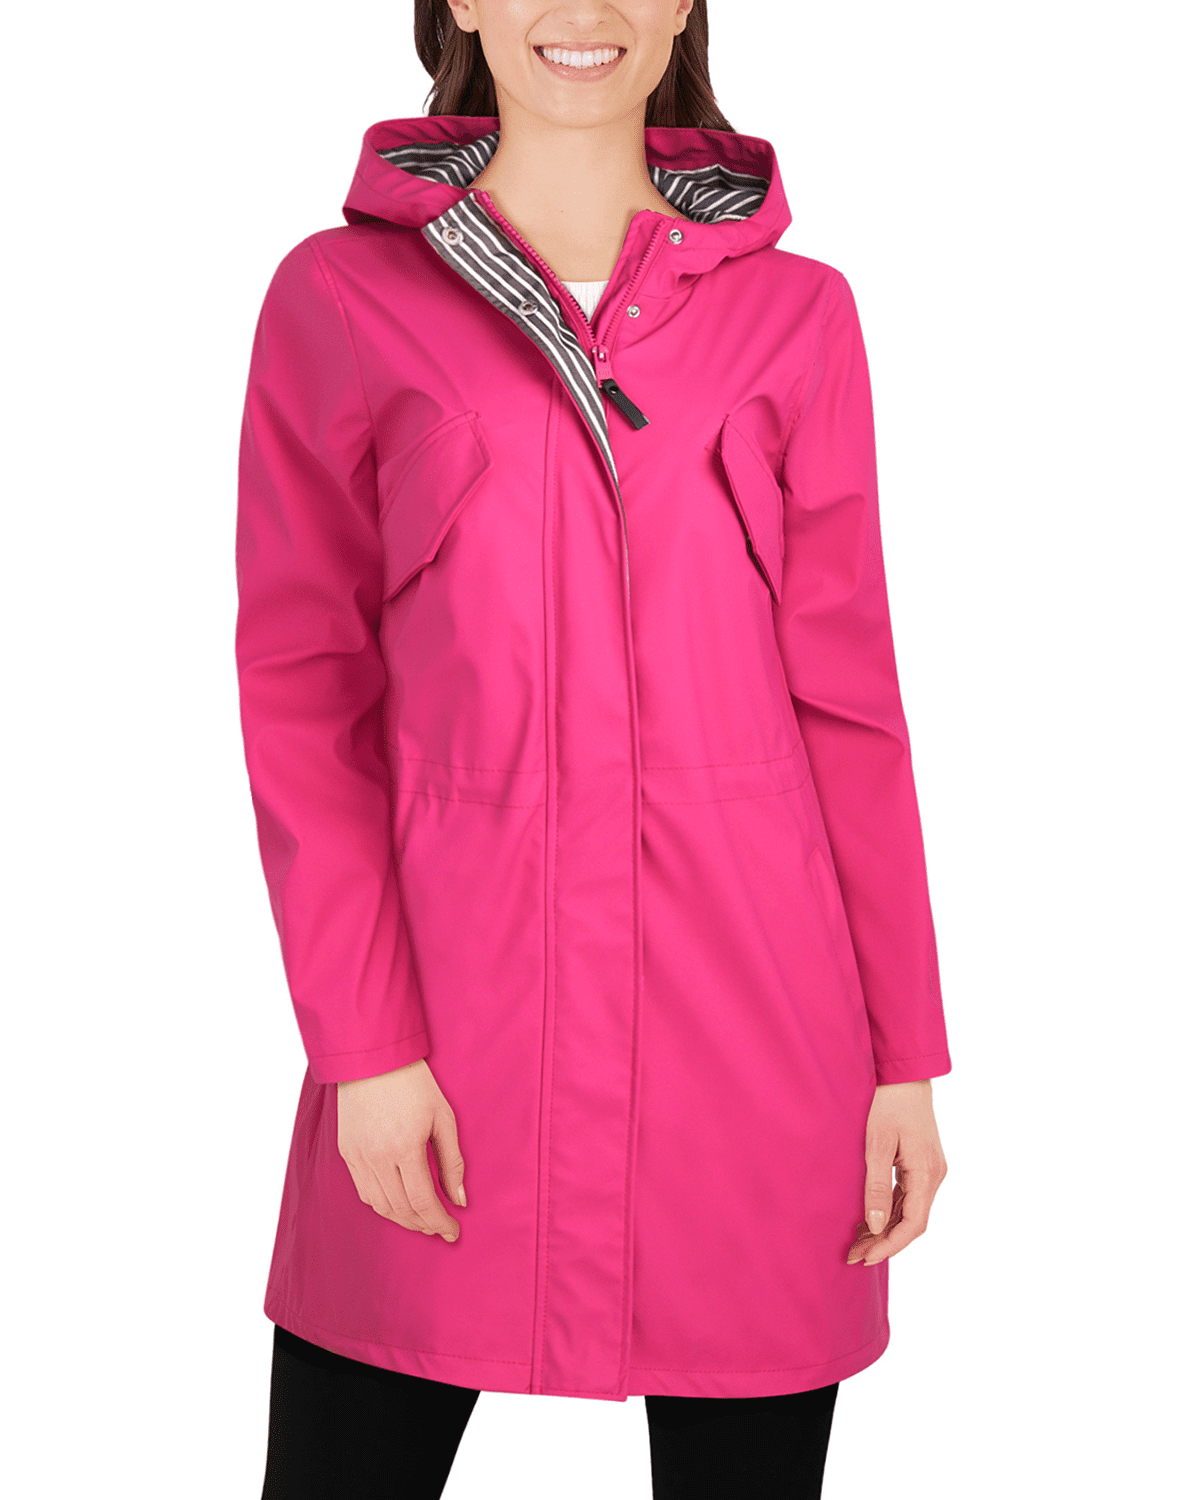 URBAN REPUBLIC Woman’s Raincoat – Waterproof Slicker Shell Rain Jacket ...